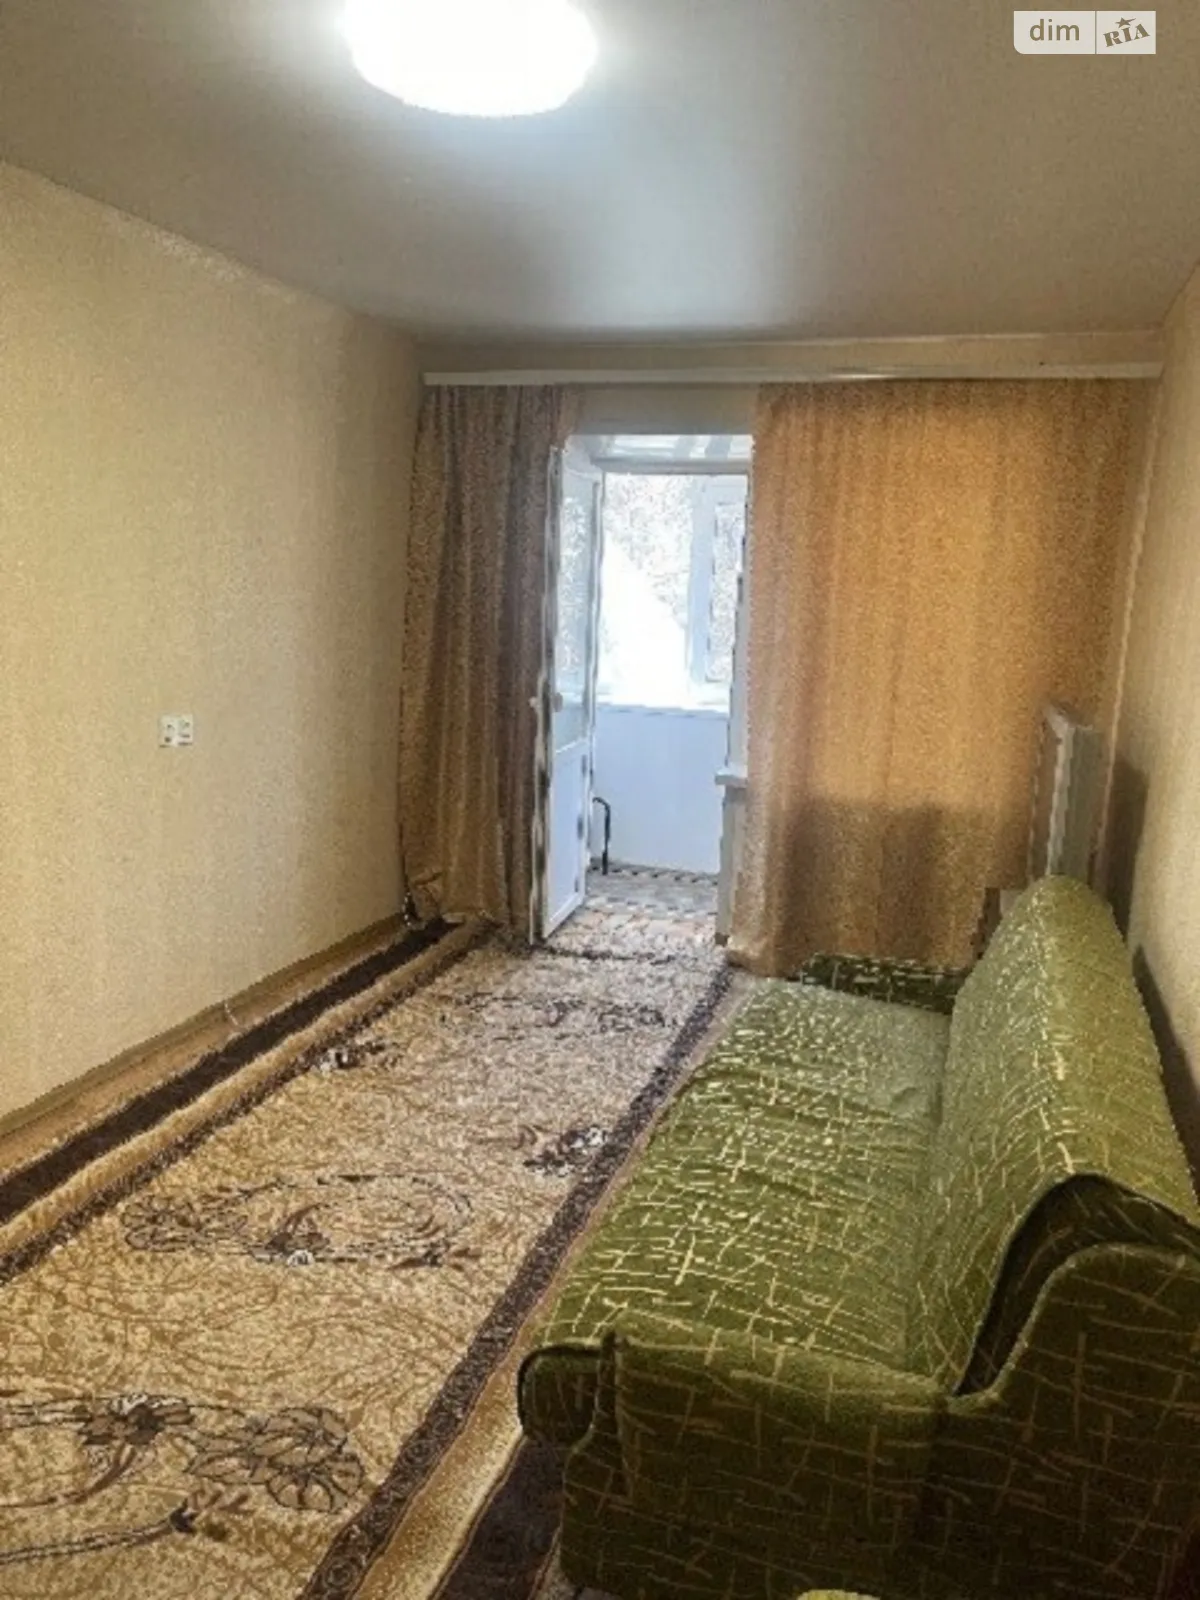 2-комнатная квартира 44.85 кв. м в Запорожье, ул. Сеченова